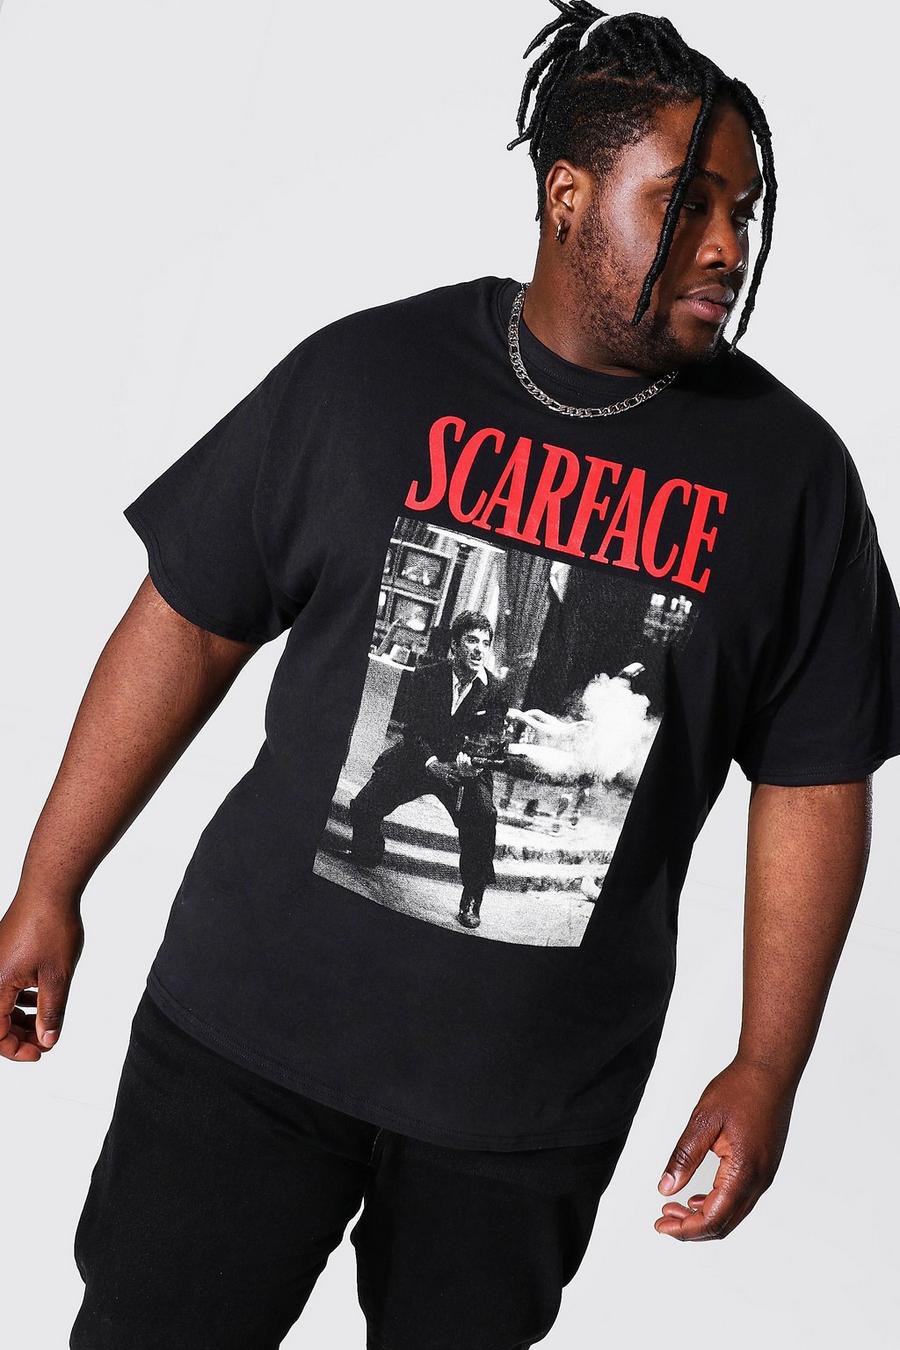 Plus T-Shirt mit lizenziertem Scarface-Print, Schwarz black